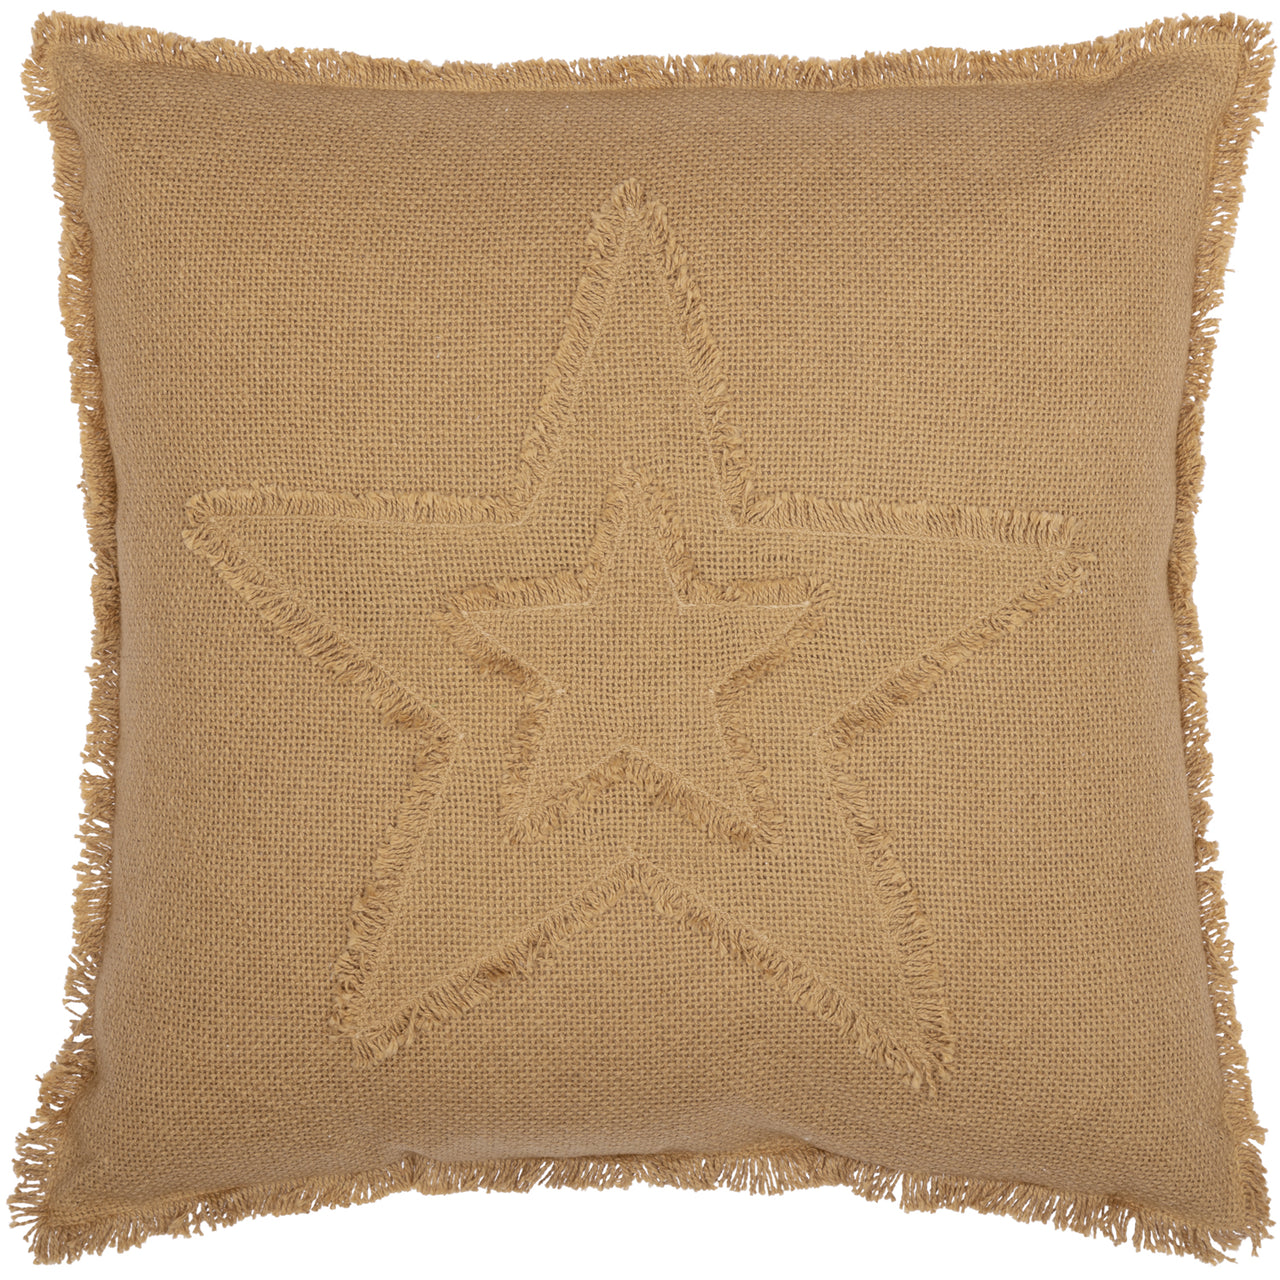 Burlap Natural Star Pillow 18x18 VHC Brands